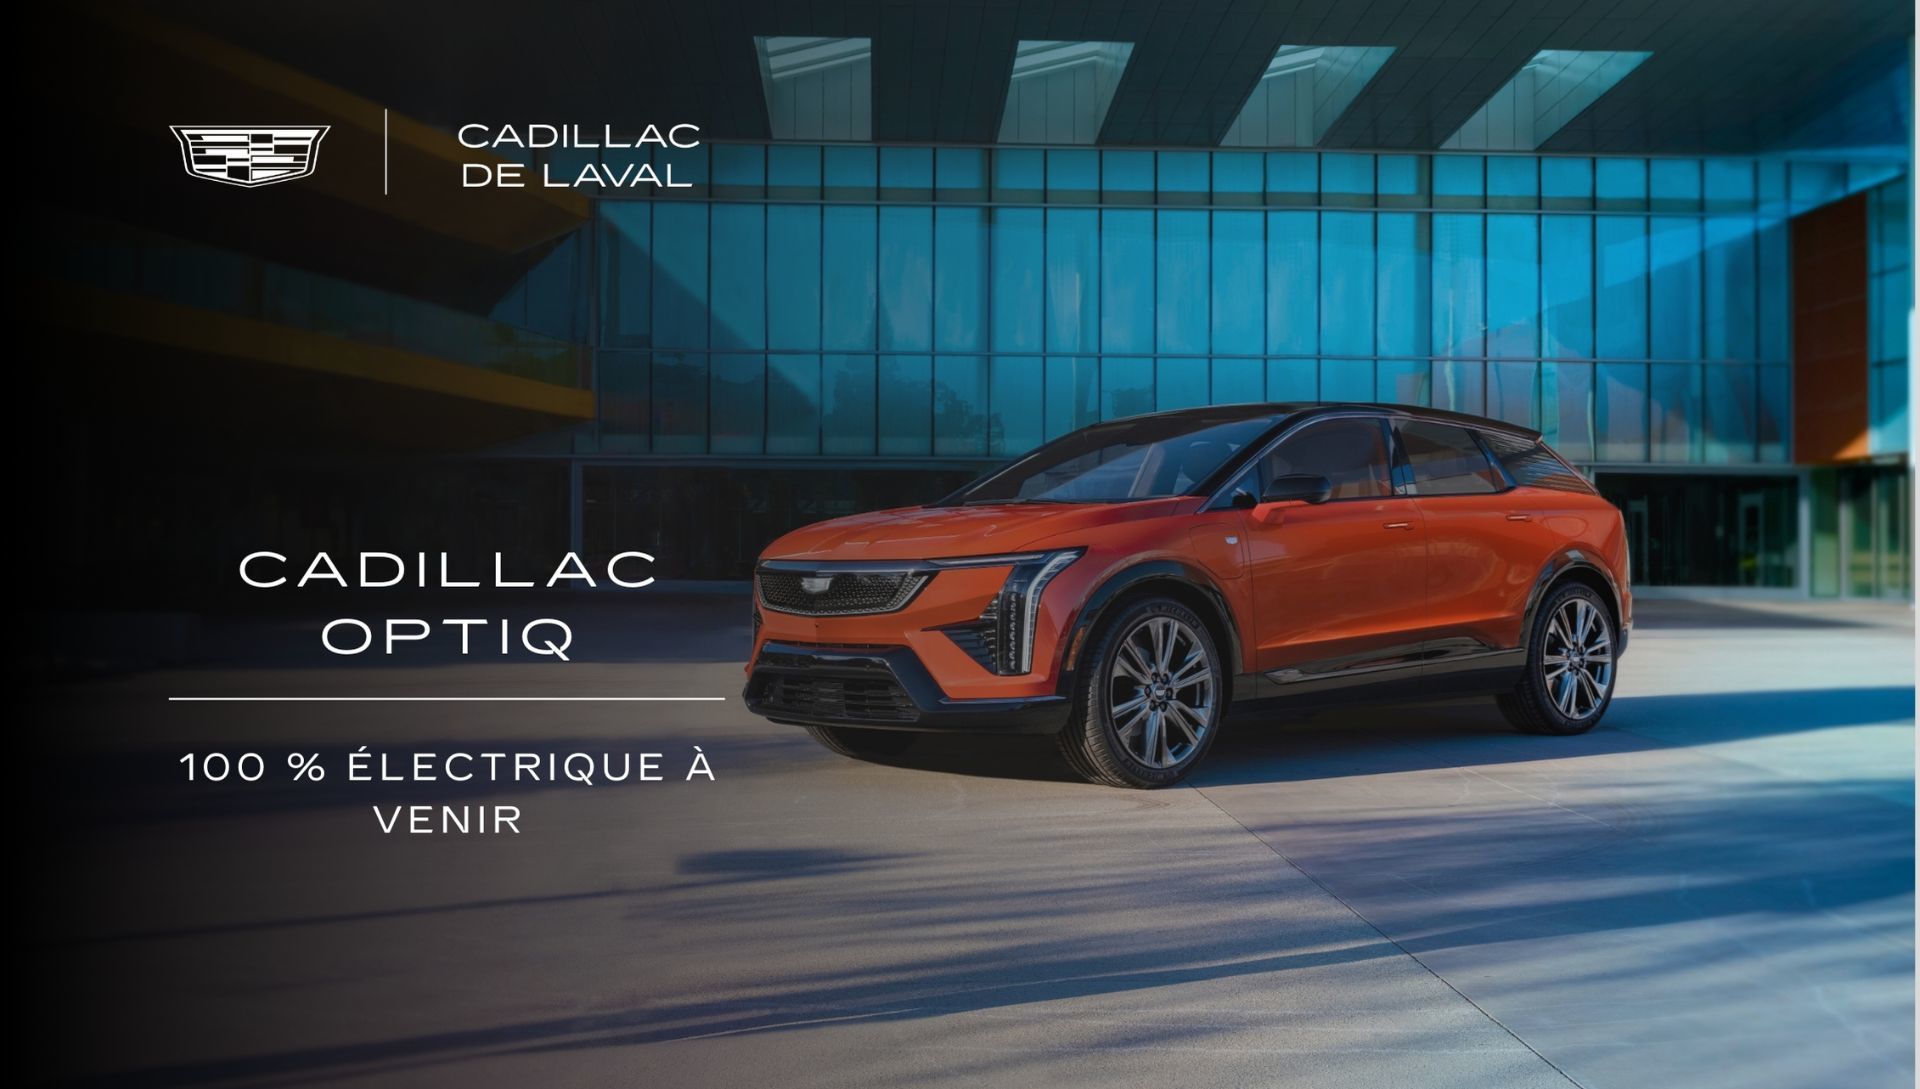 Cadillac Optiq: 100 % Electric, Coming Soon